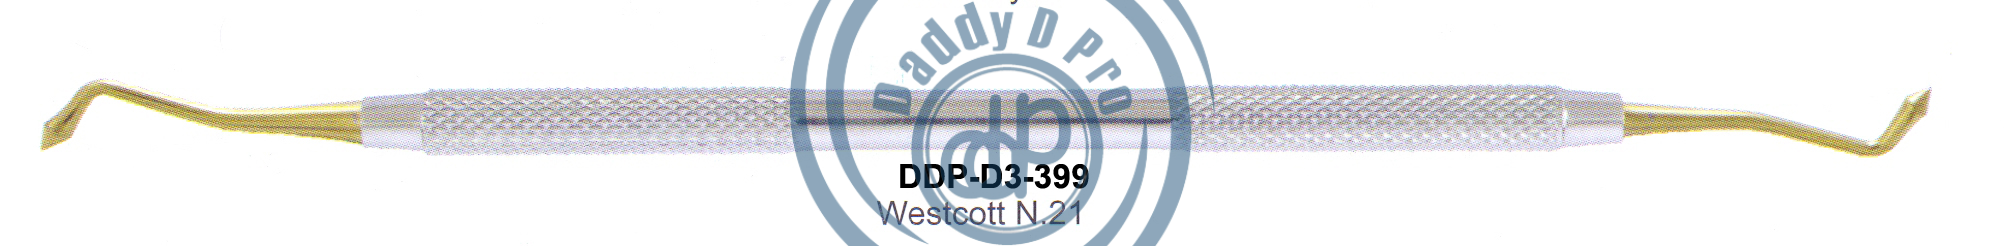 images/DDP-D3-399.png